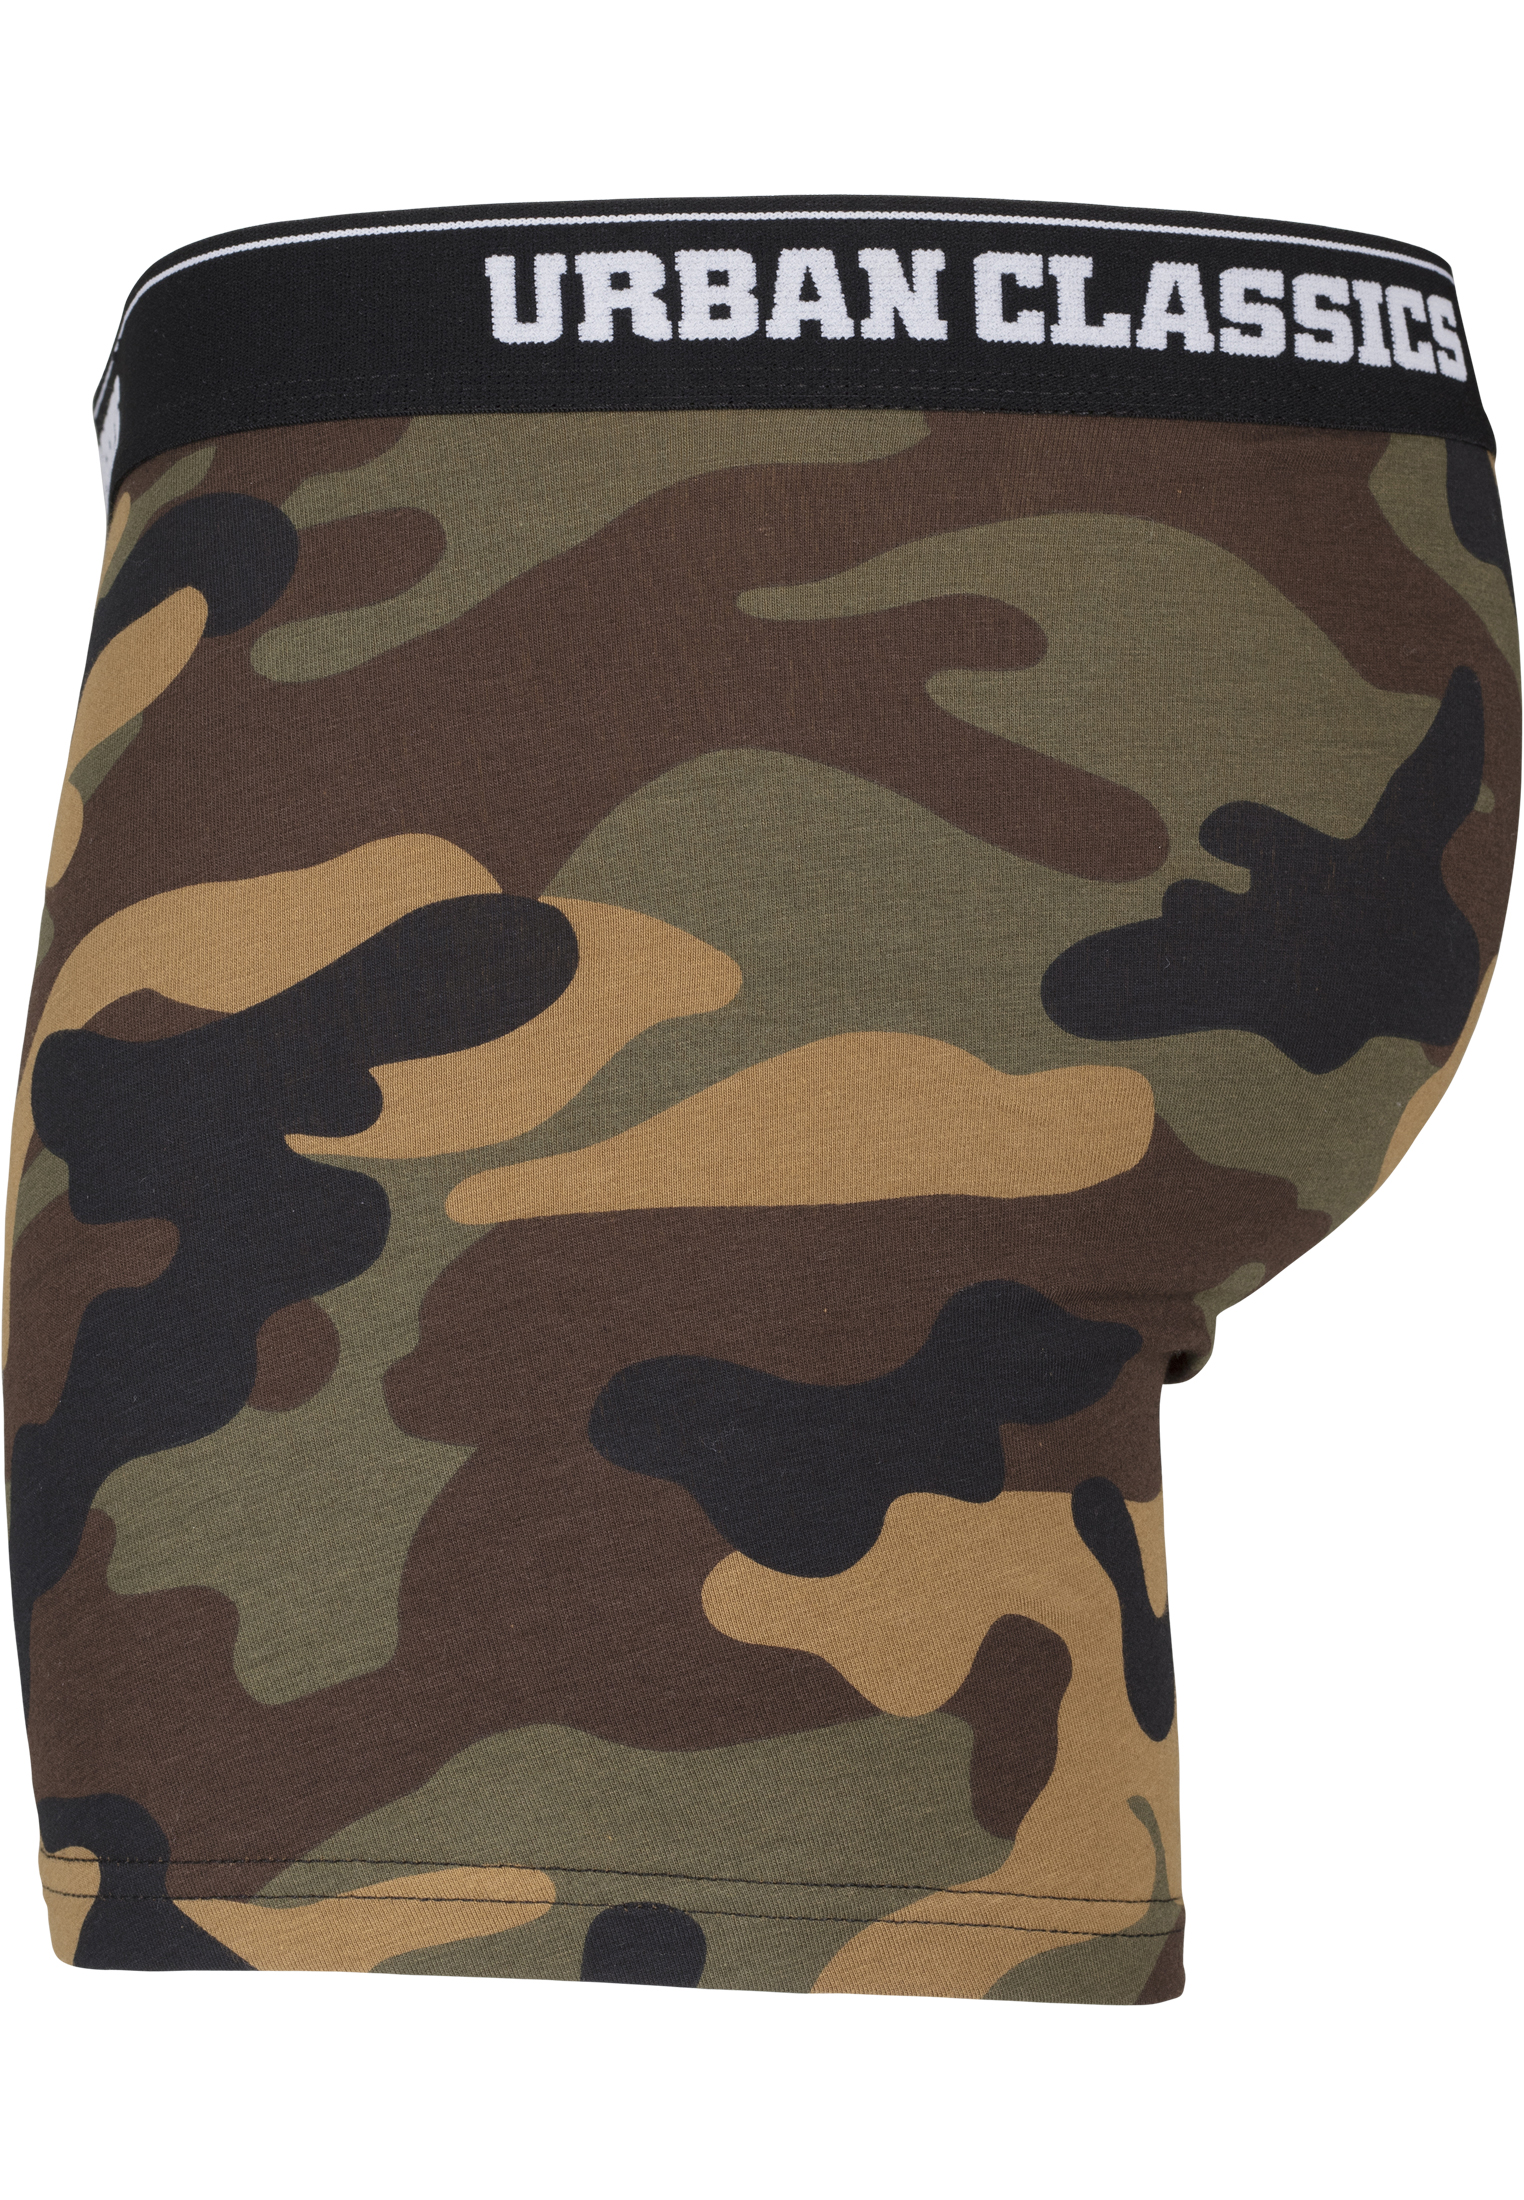 Underwear 2-Pack Camo Boxer Shorts in Farbe wood camo